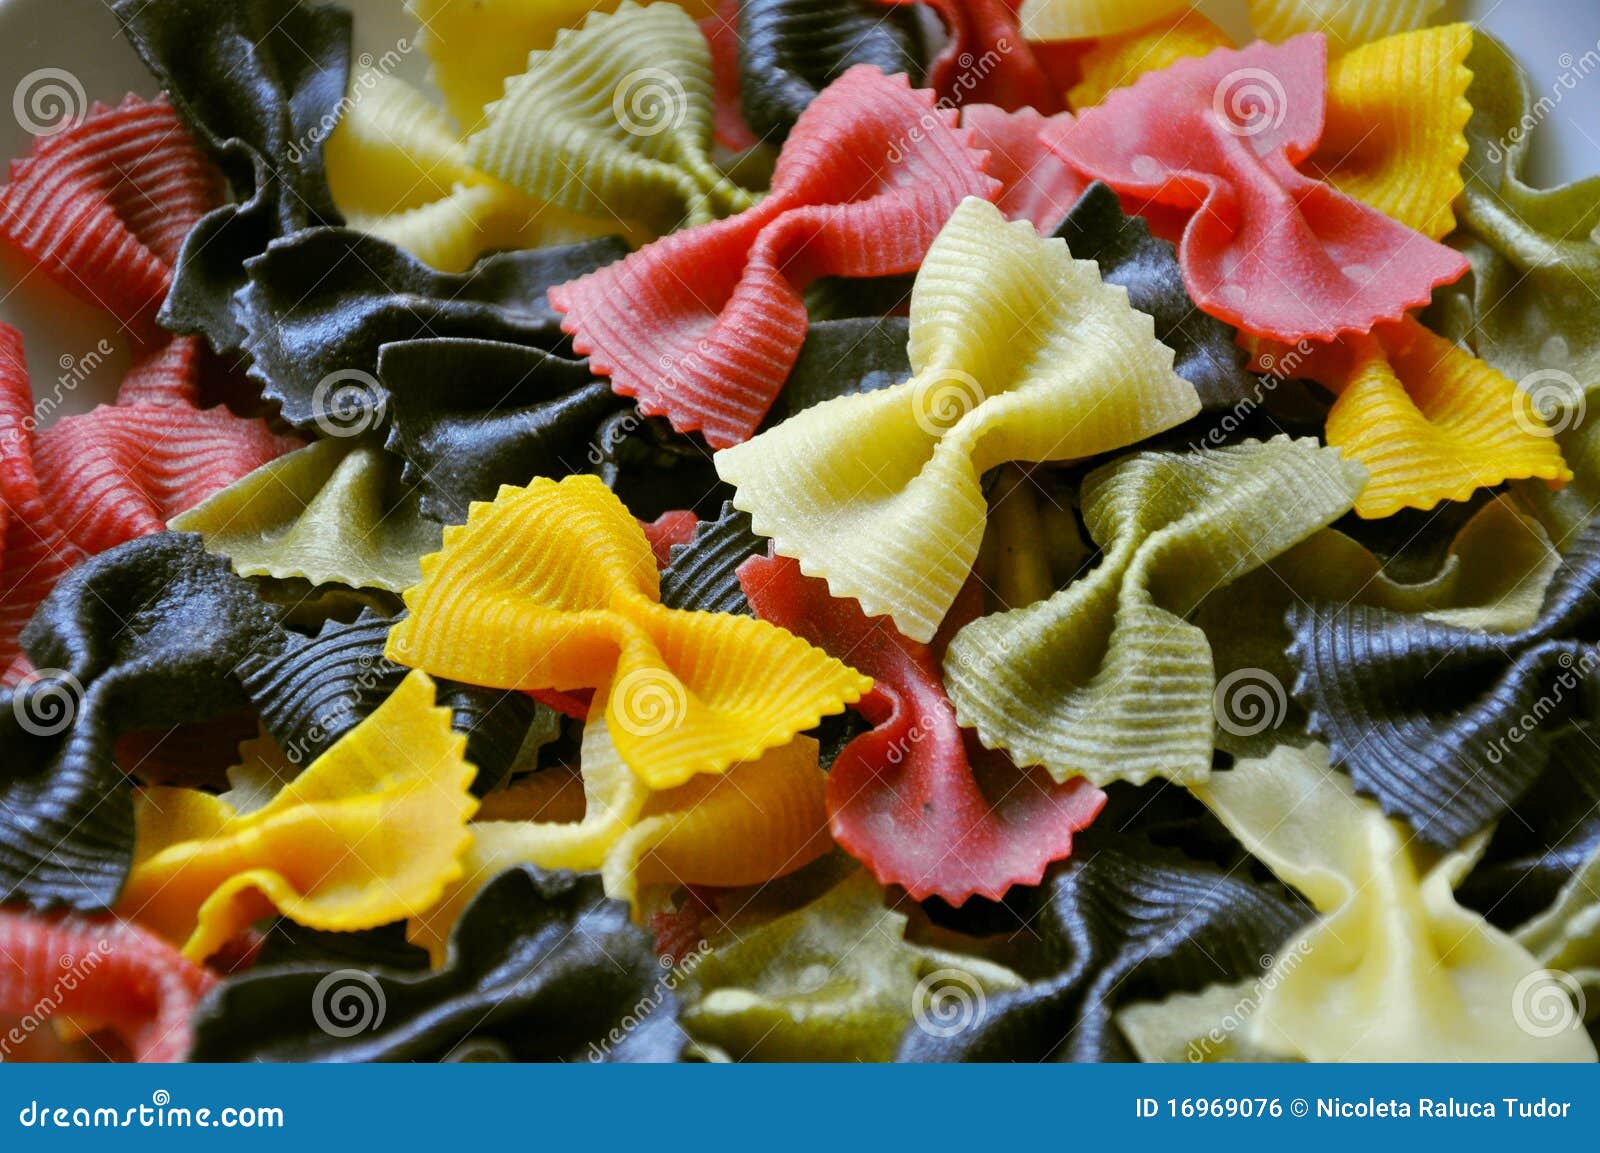 Italian food: pasta stock photo. Image of close, dried - 16969076